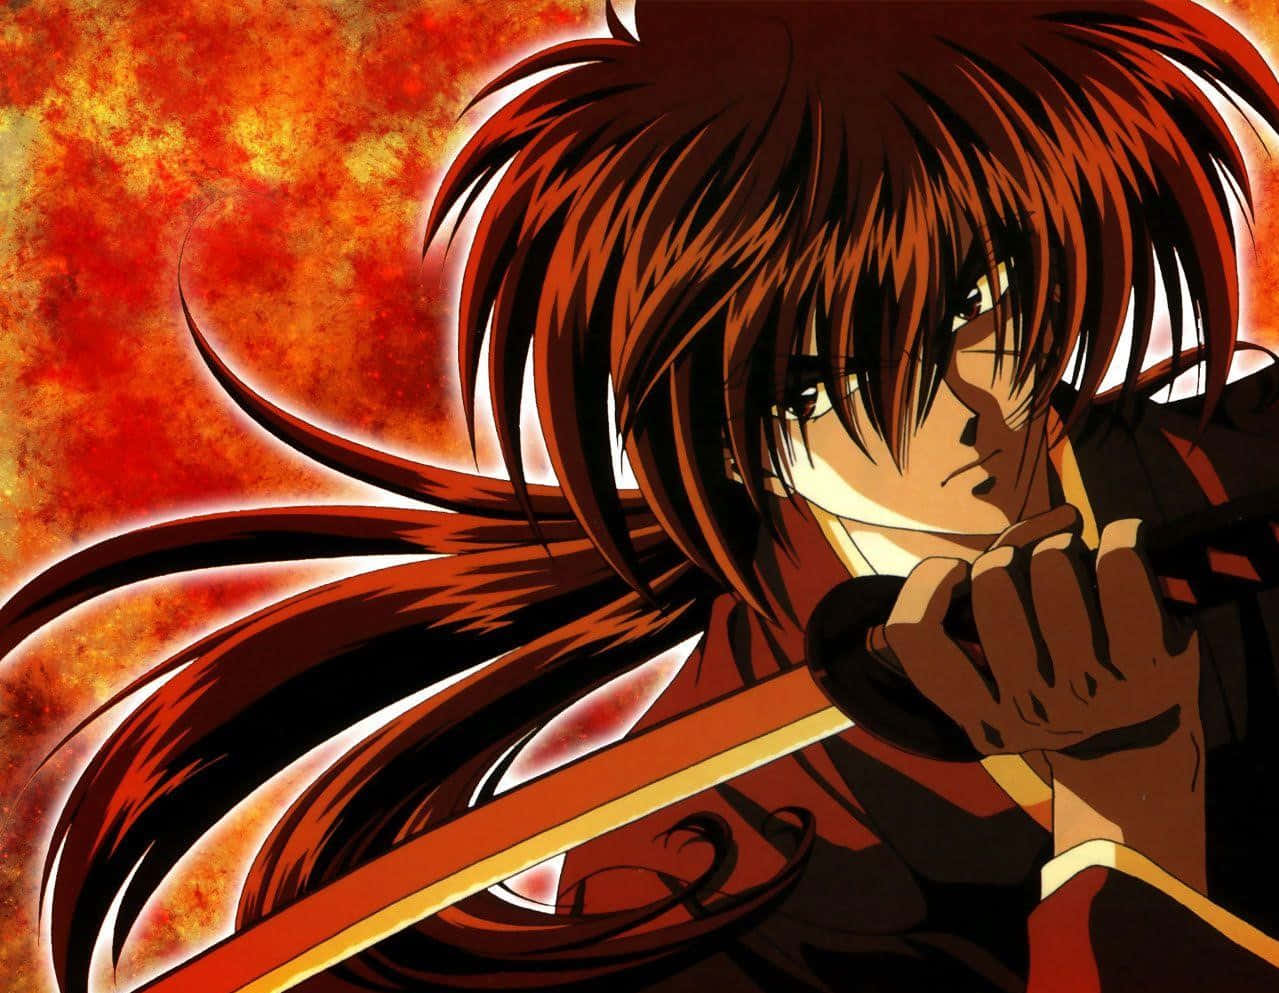 Famous Manga Character Kenshin Himura In Battle Stance Wallpaper